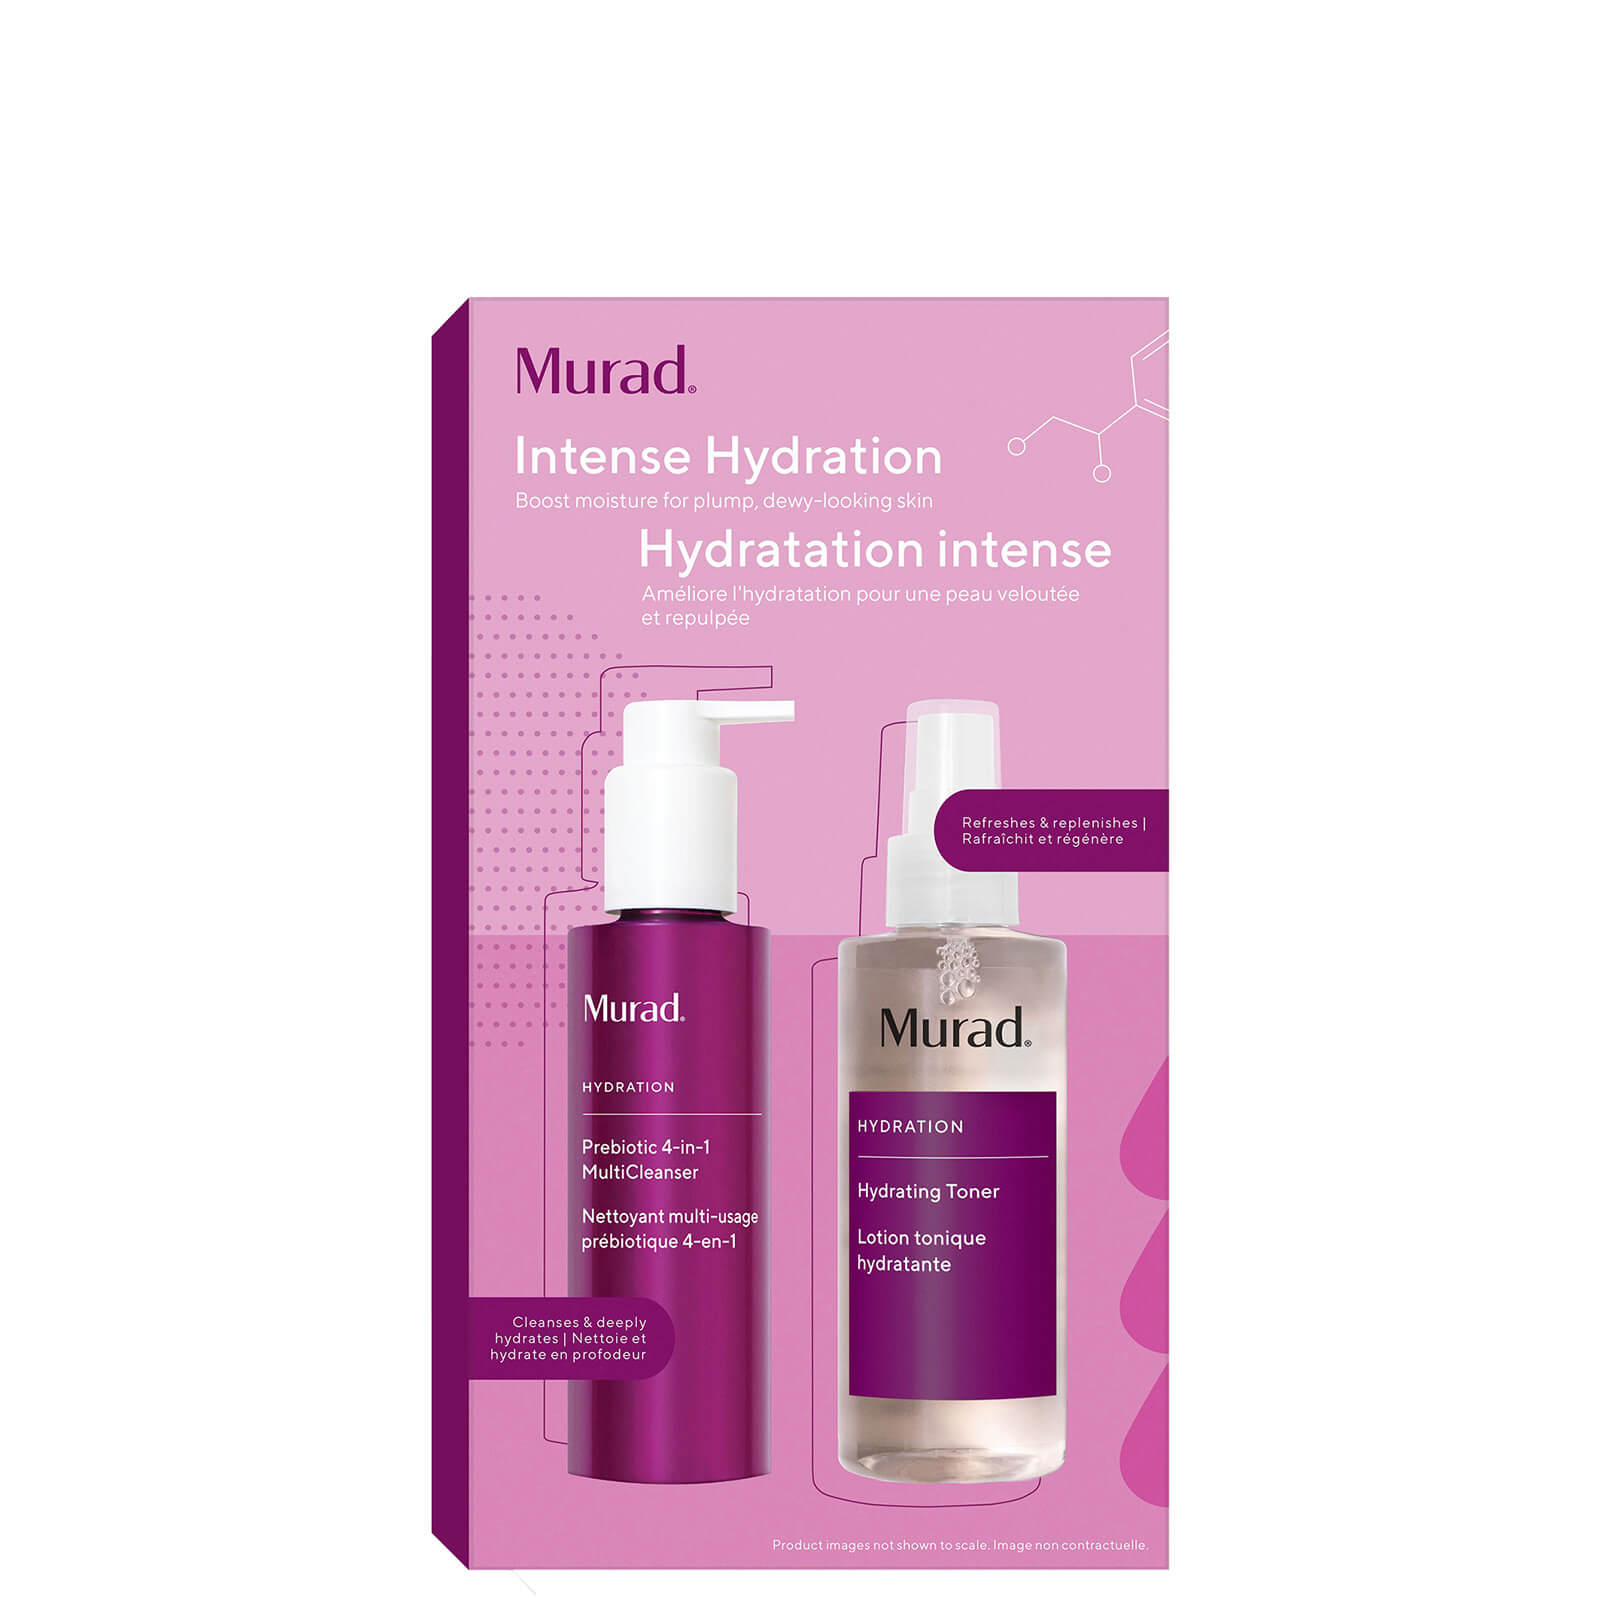 Murad Intense Hydration Value Kit (Worth £68.00)